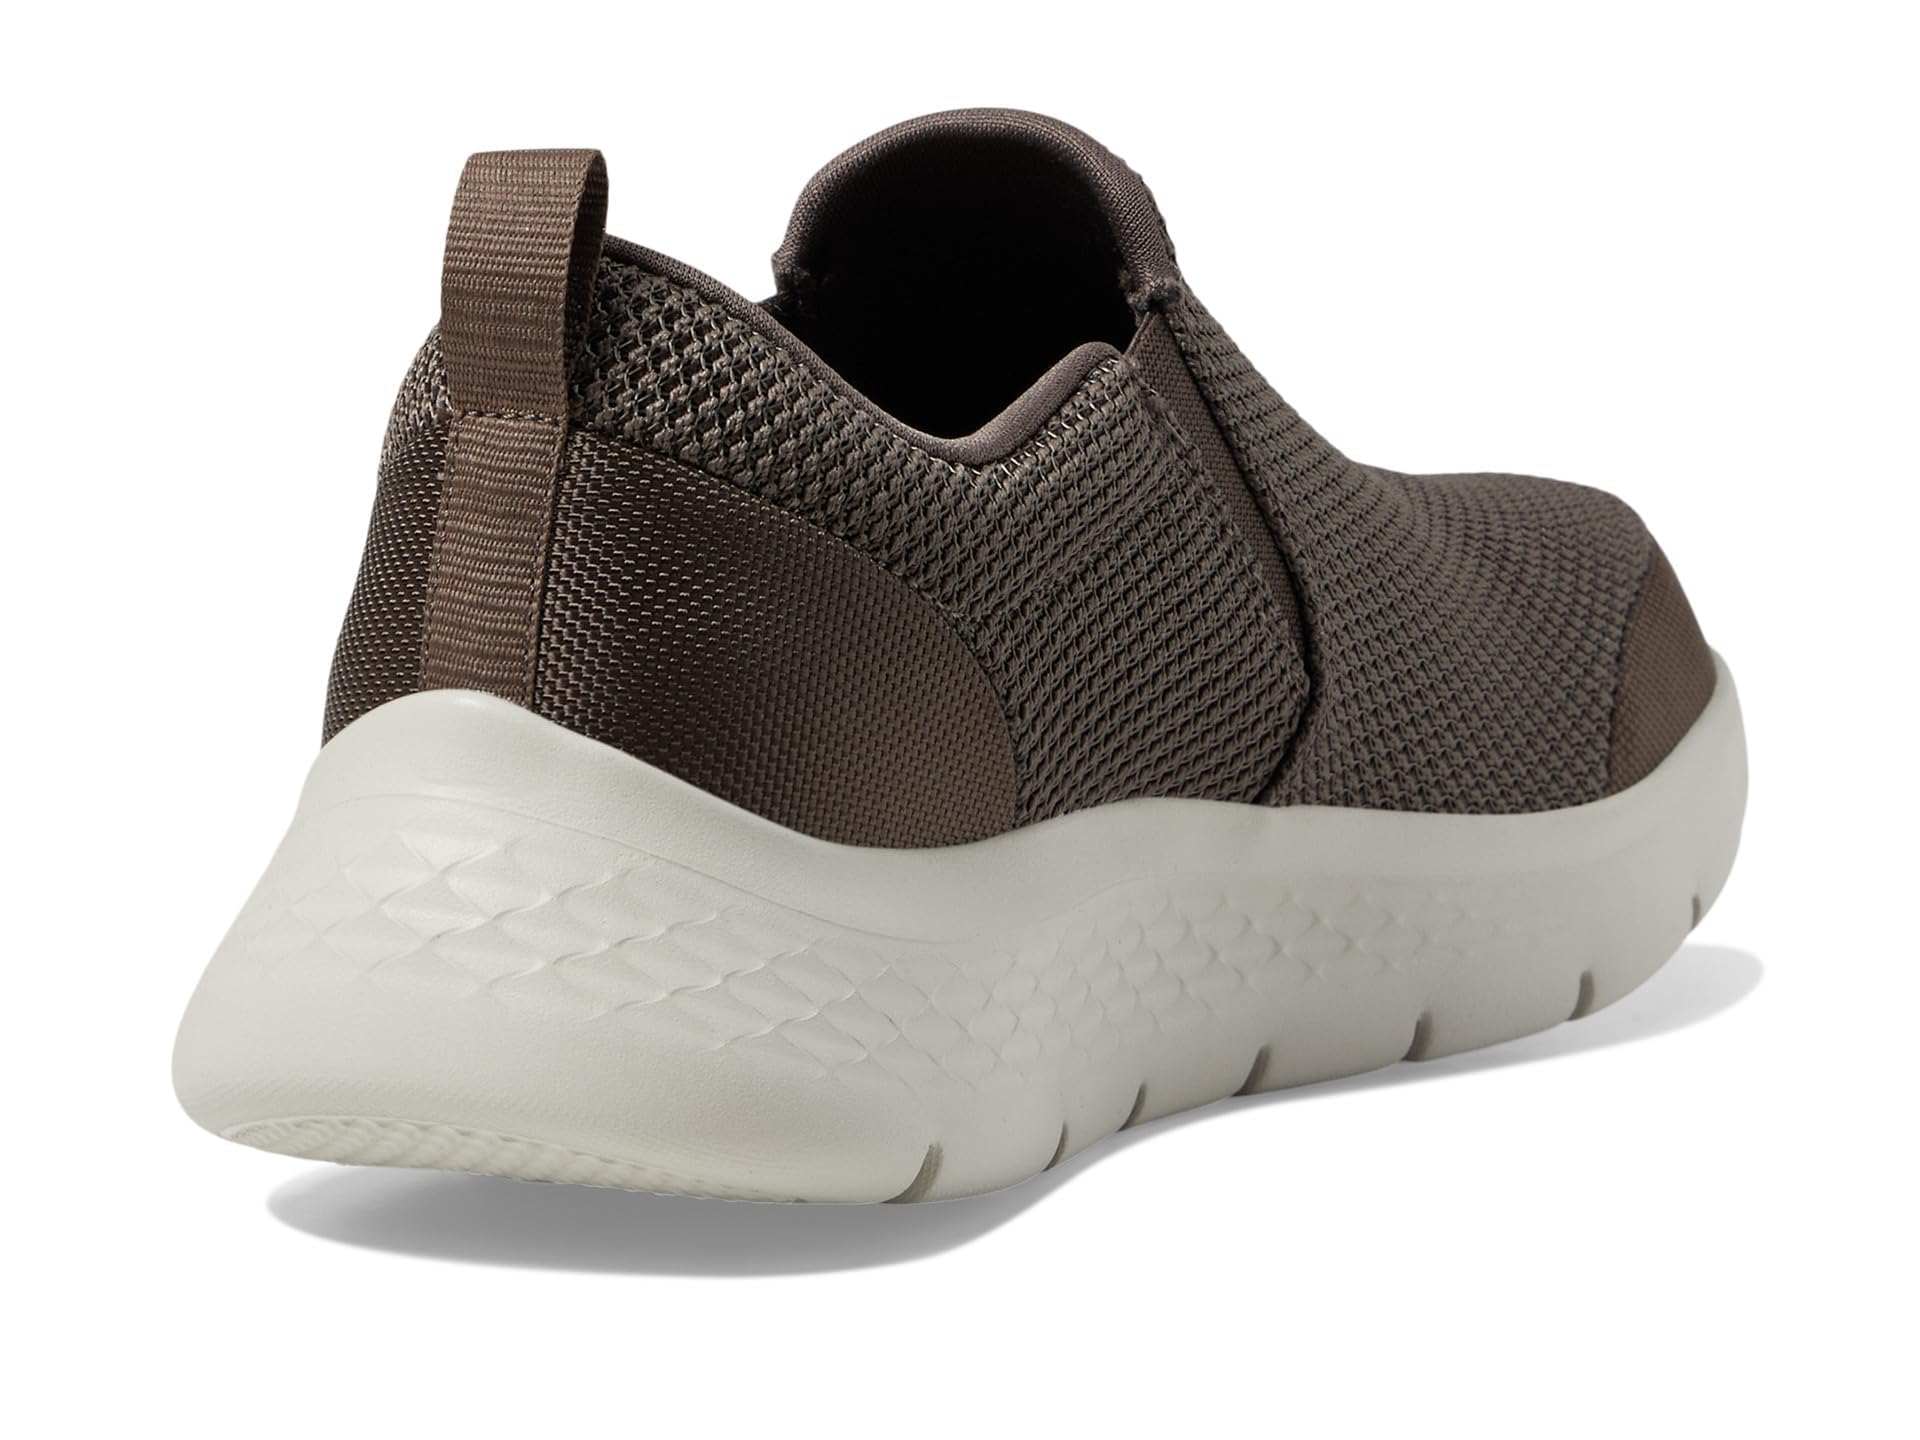 Skechers Men's Gowalk Flex-Athletic Slip-on Casual Loafer Walking Shoes with Air Cooled Foam Sneaker